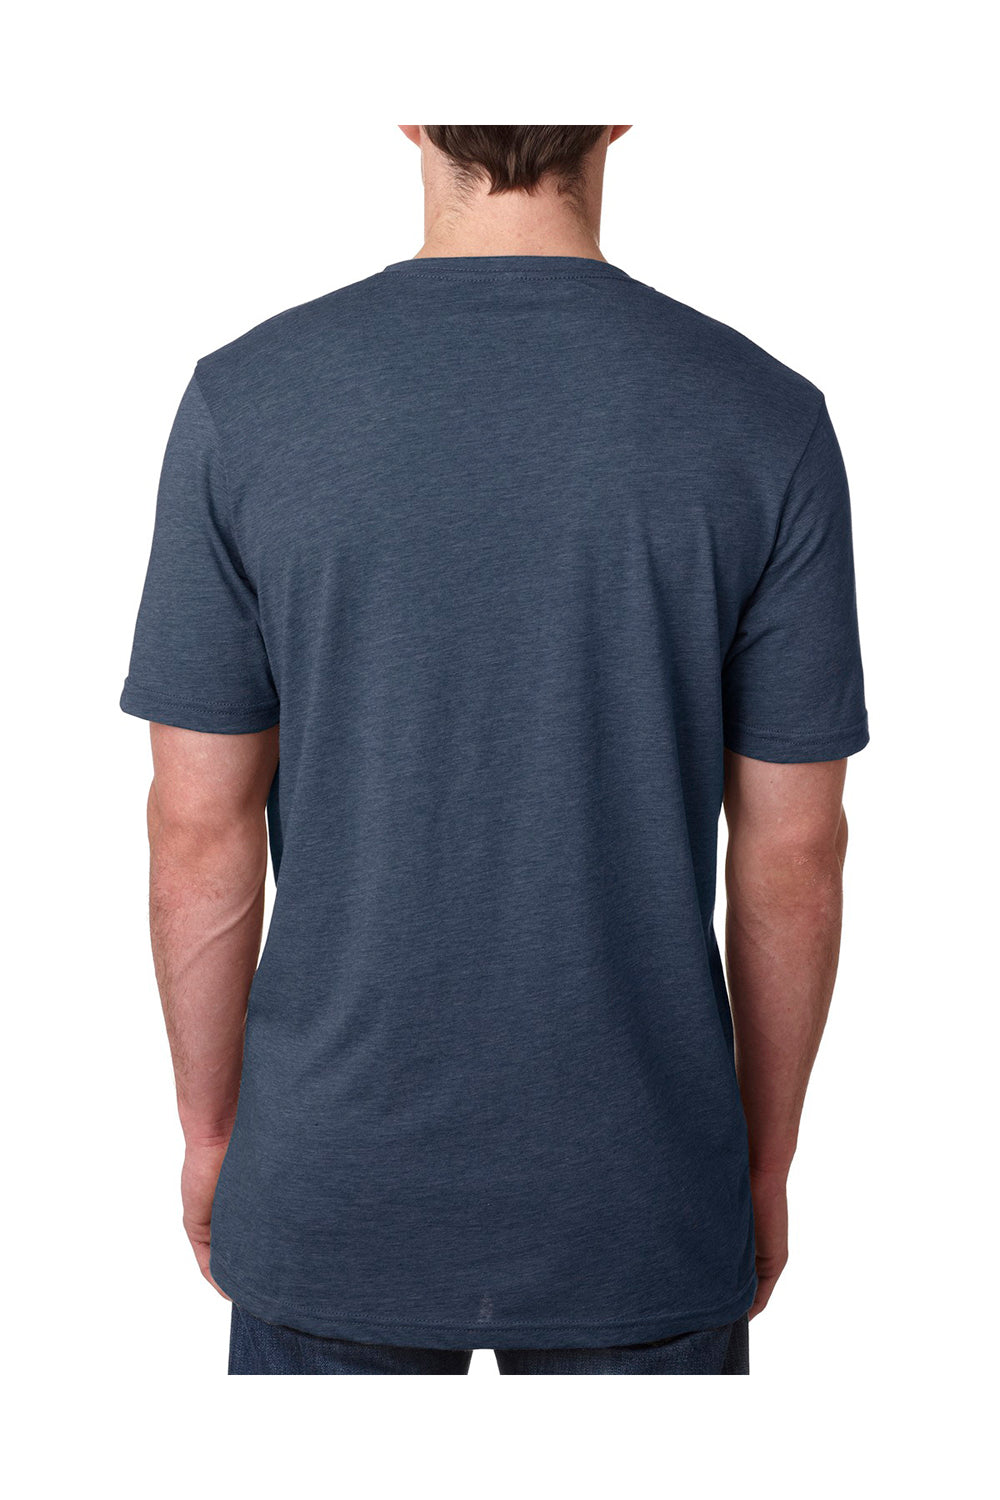 Next Level 6200 Mens Jersey Short Sleeve Crewneck T-Shirt Indigo Blue Back